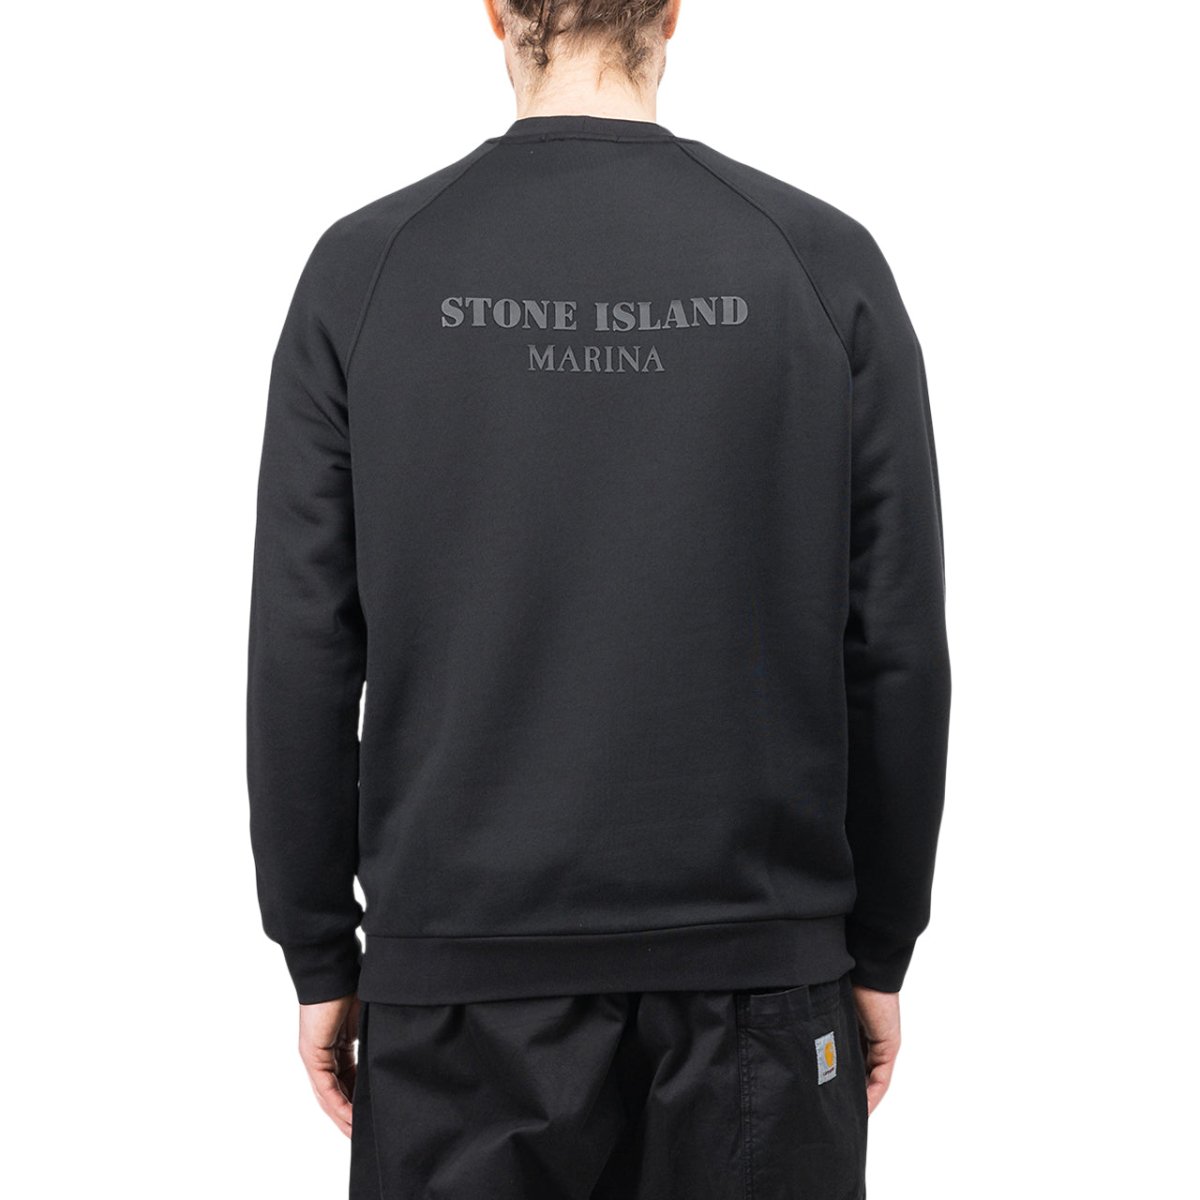 Stone Island Marina Sweatshirt (Schwarz)  - Allike Store